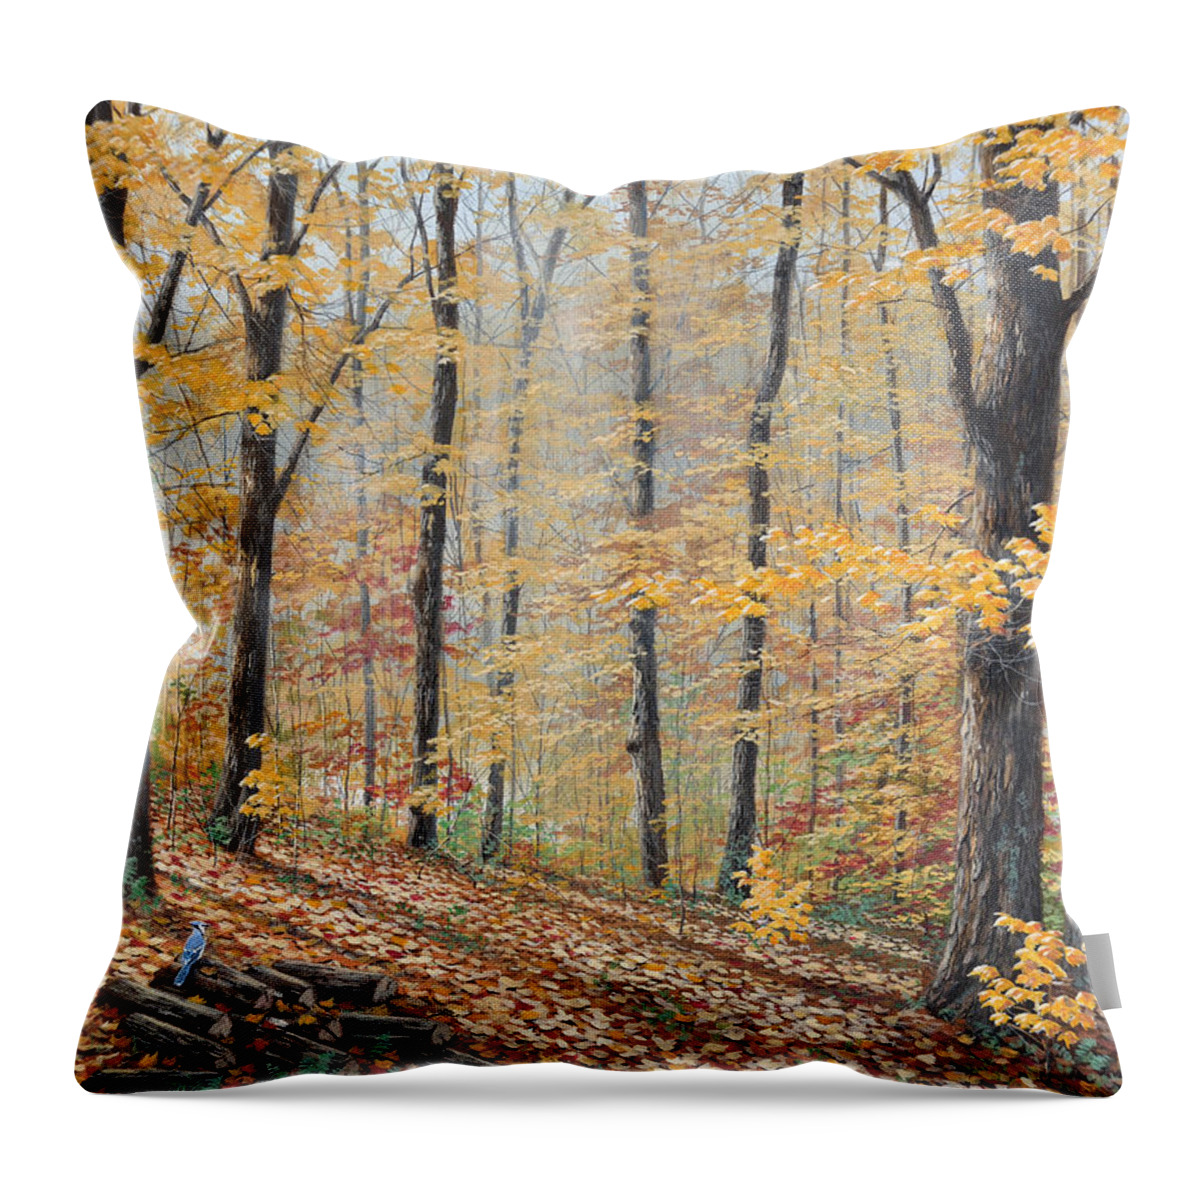 Jake Vandenbrink Throw Pillow featuring the painting Days Of Autumn by Jake Vandenbrink